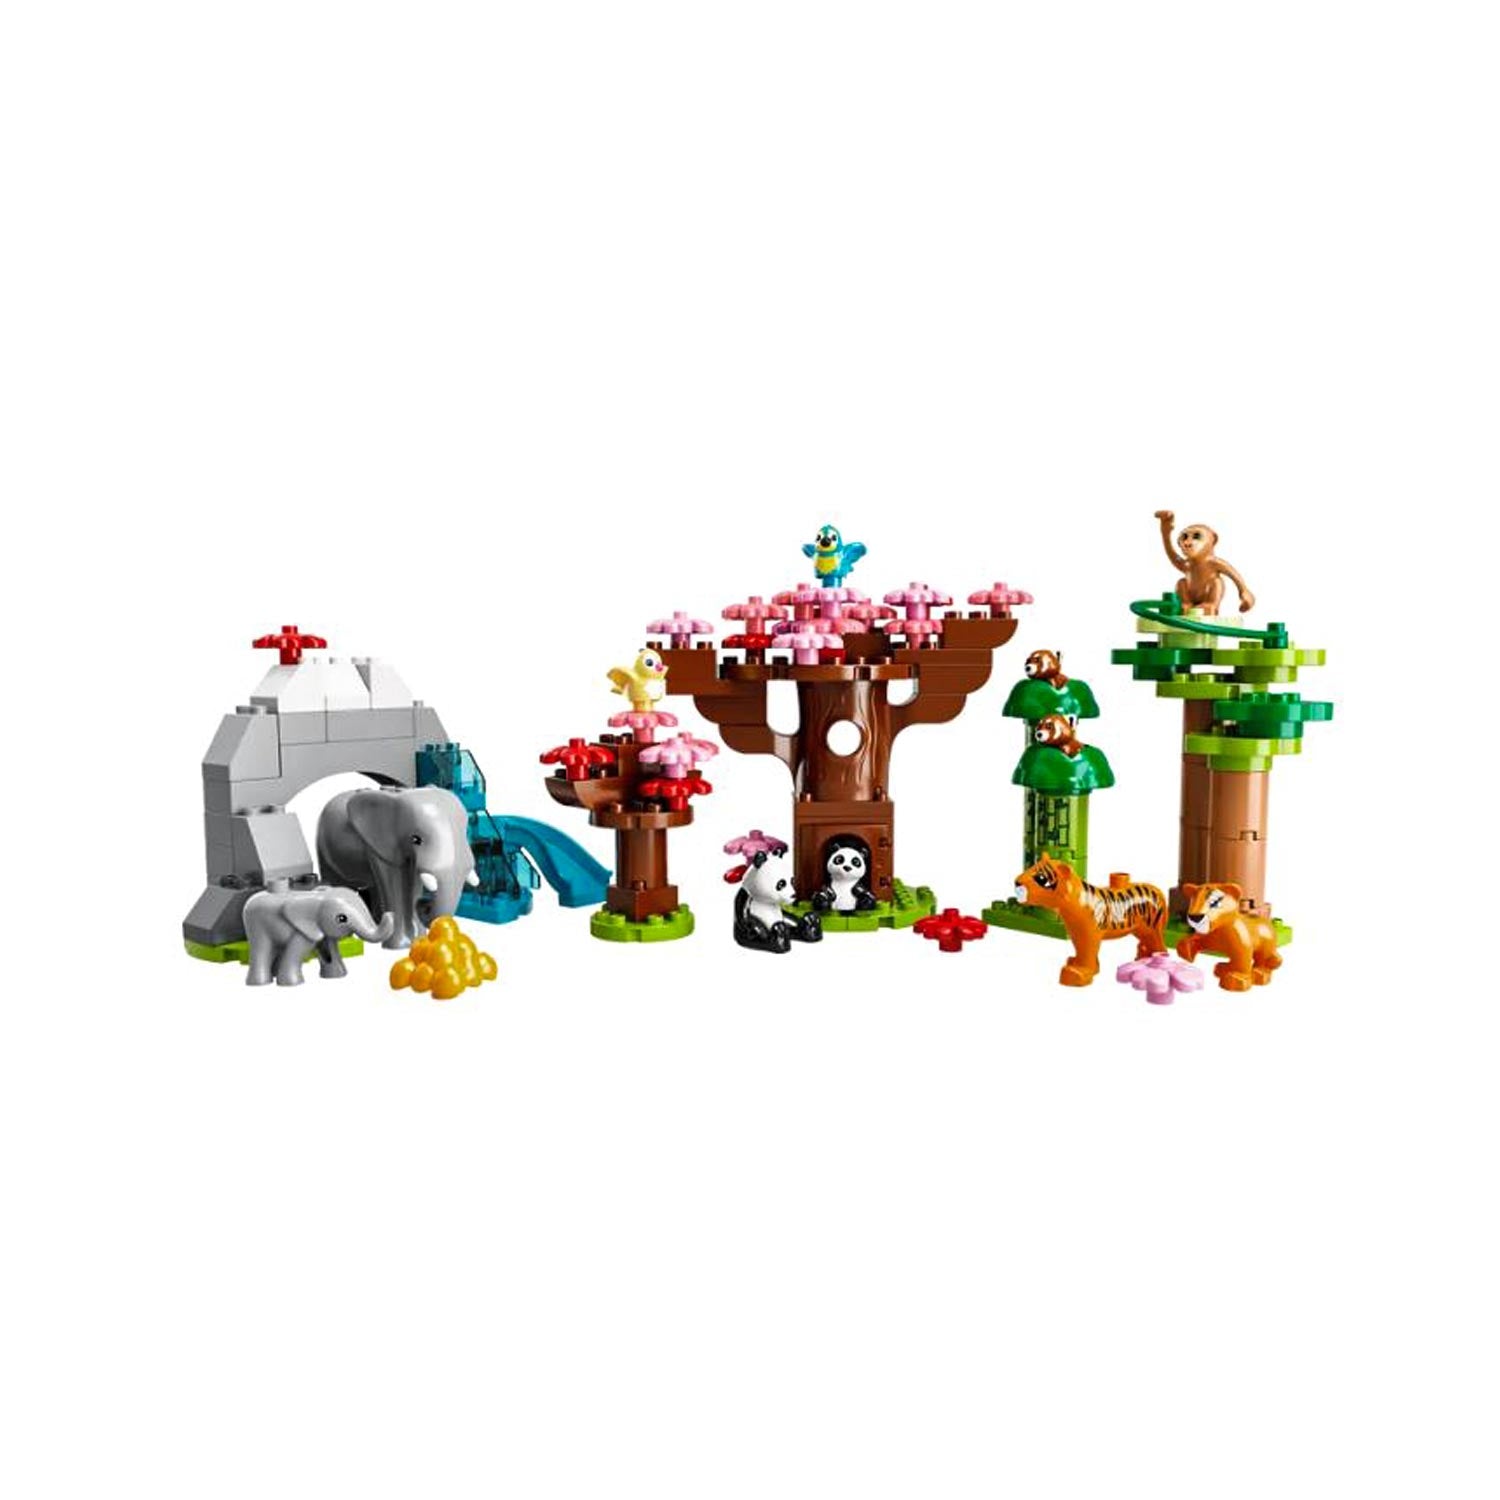 Lego Duplo Wild Animals Of Asia